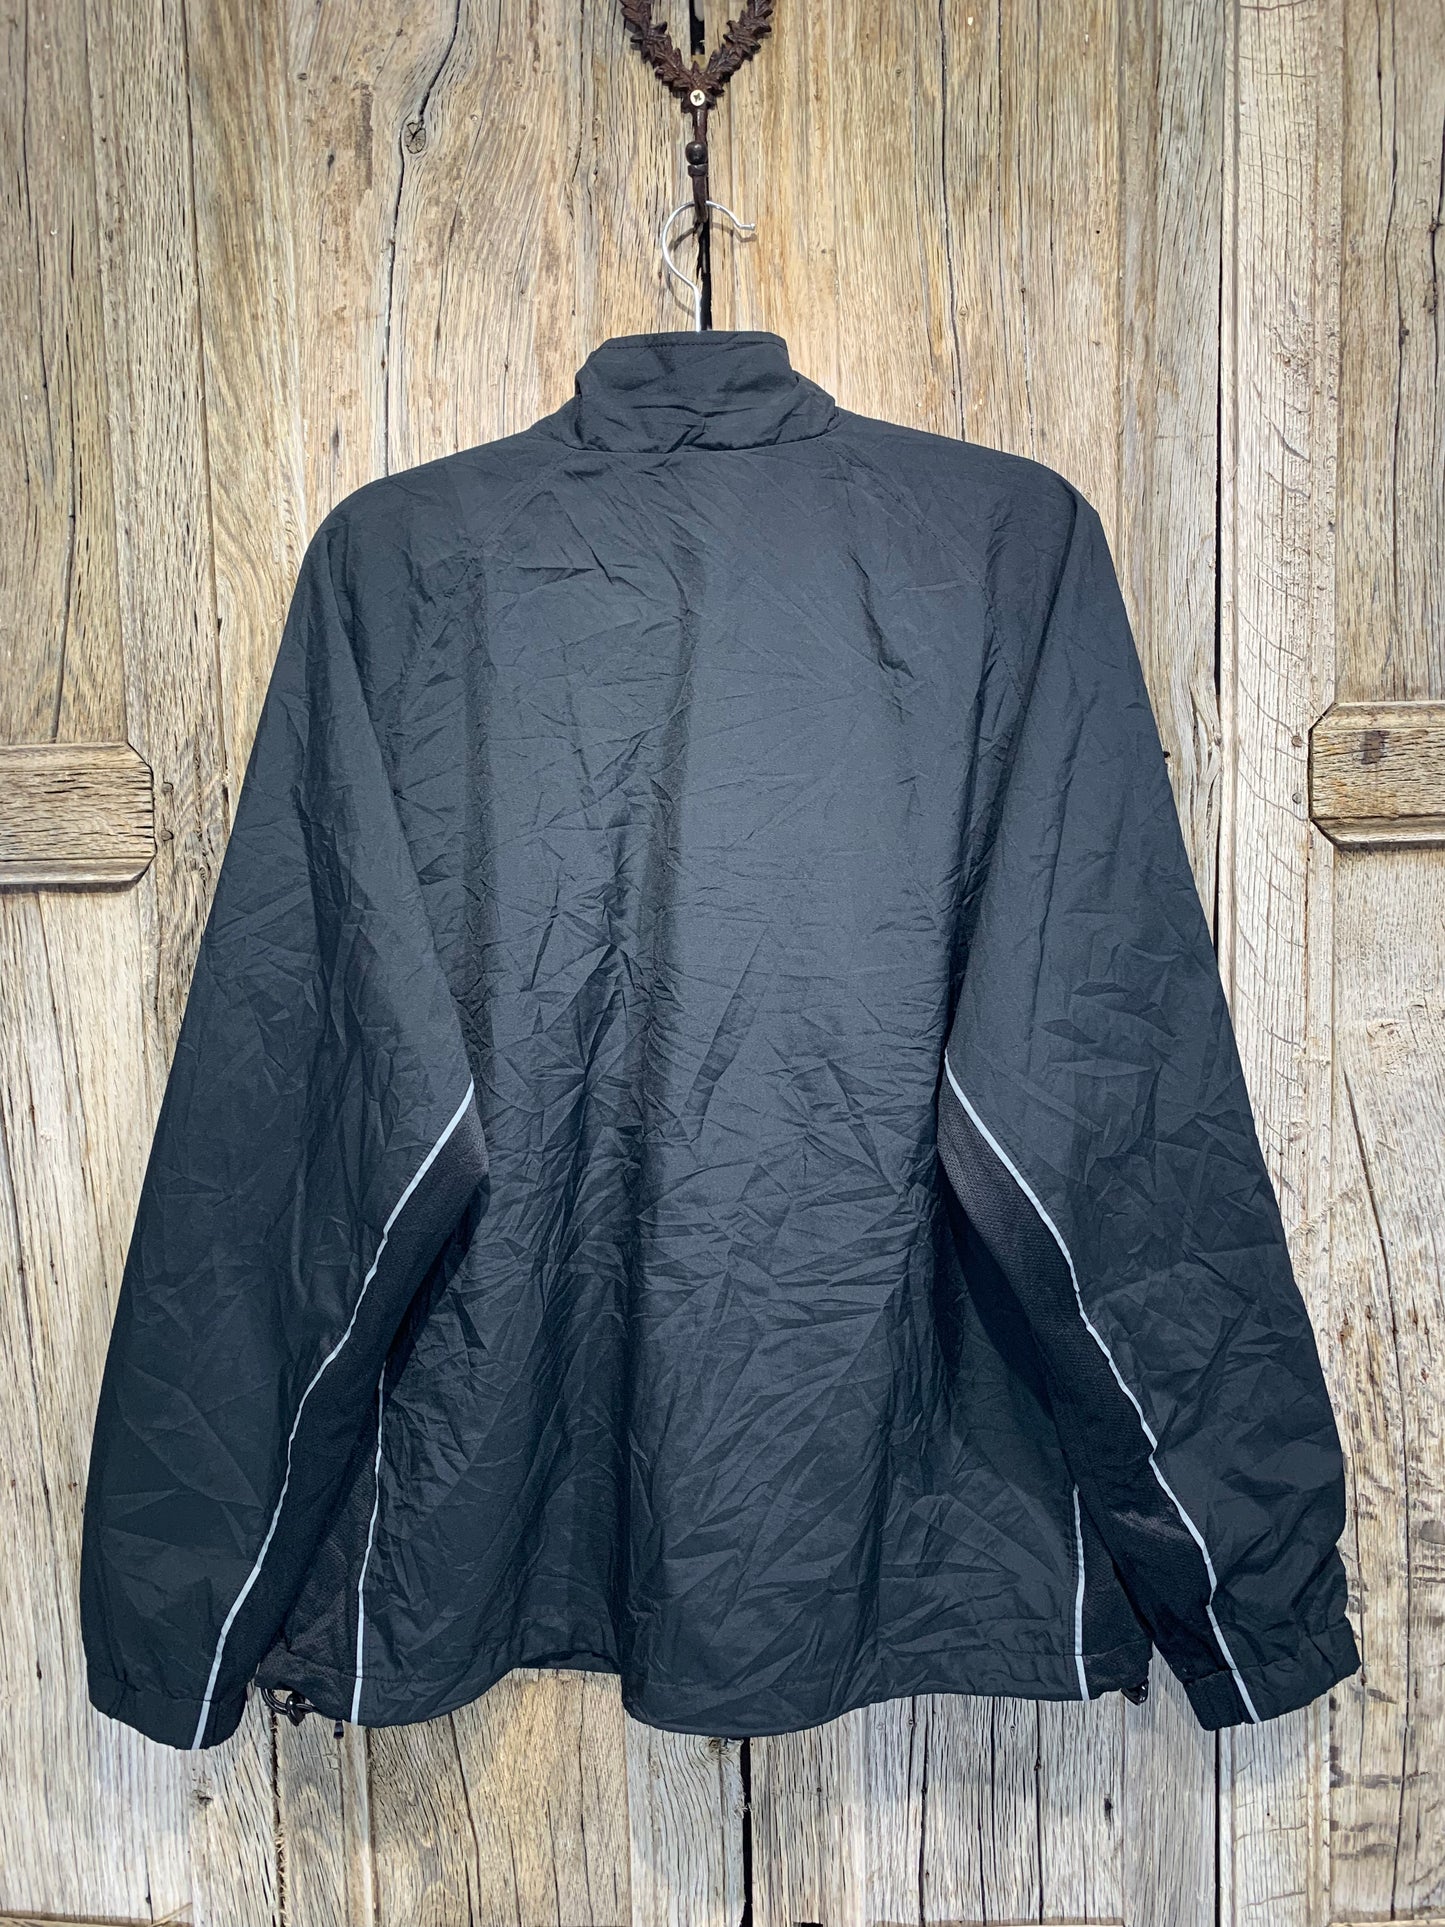 Vintage Champion Black Zip Jacket